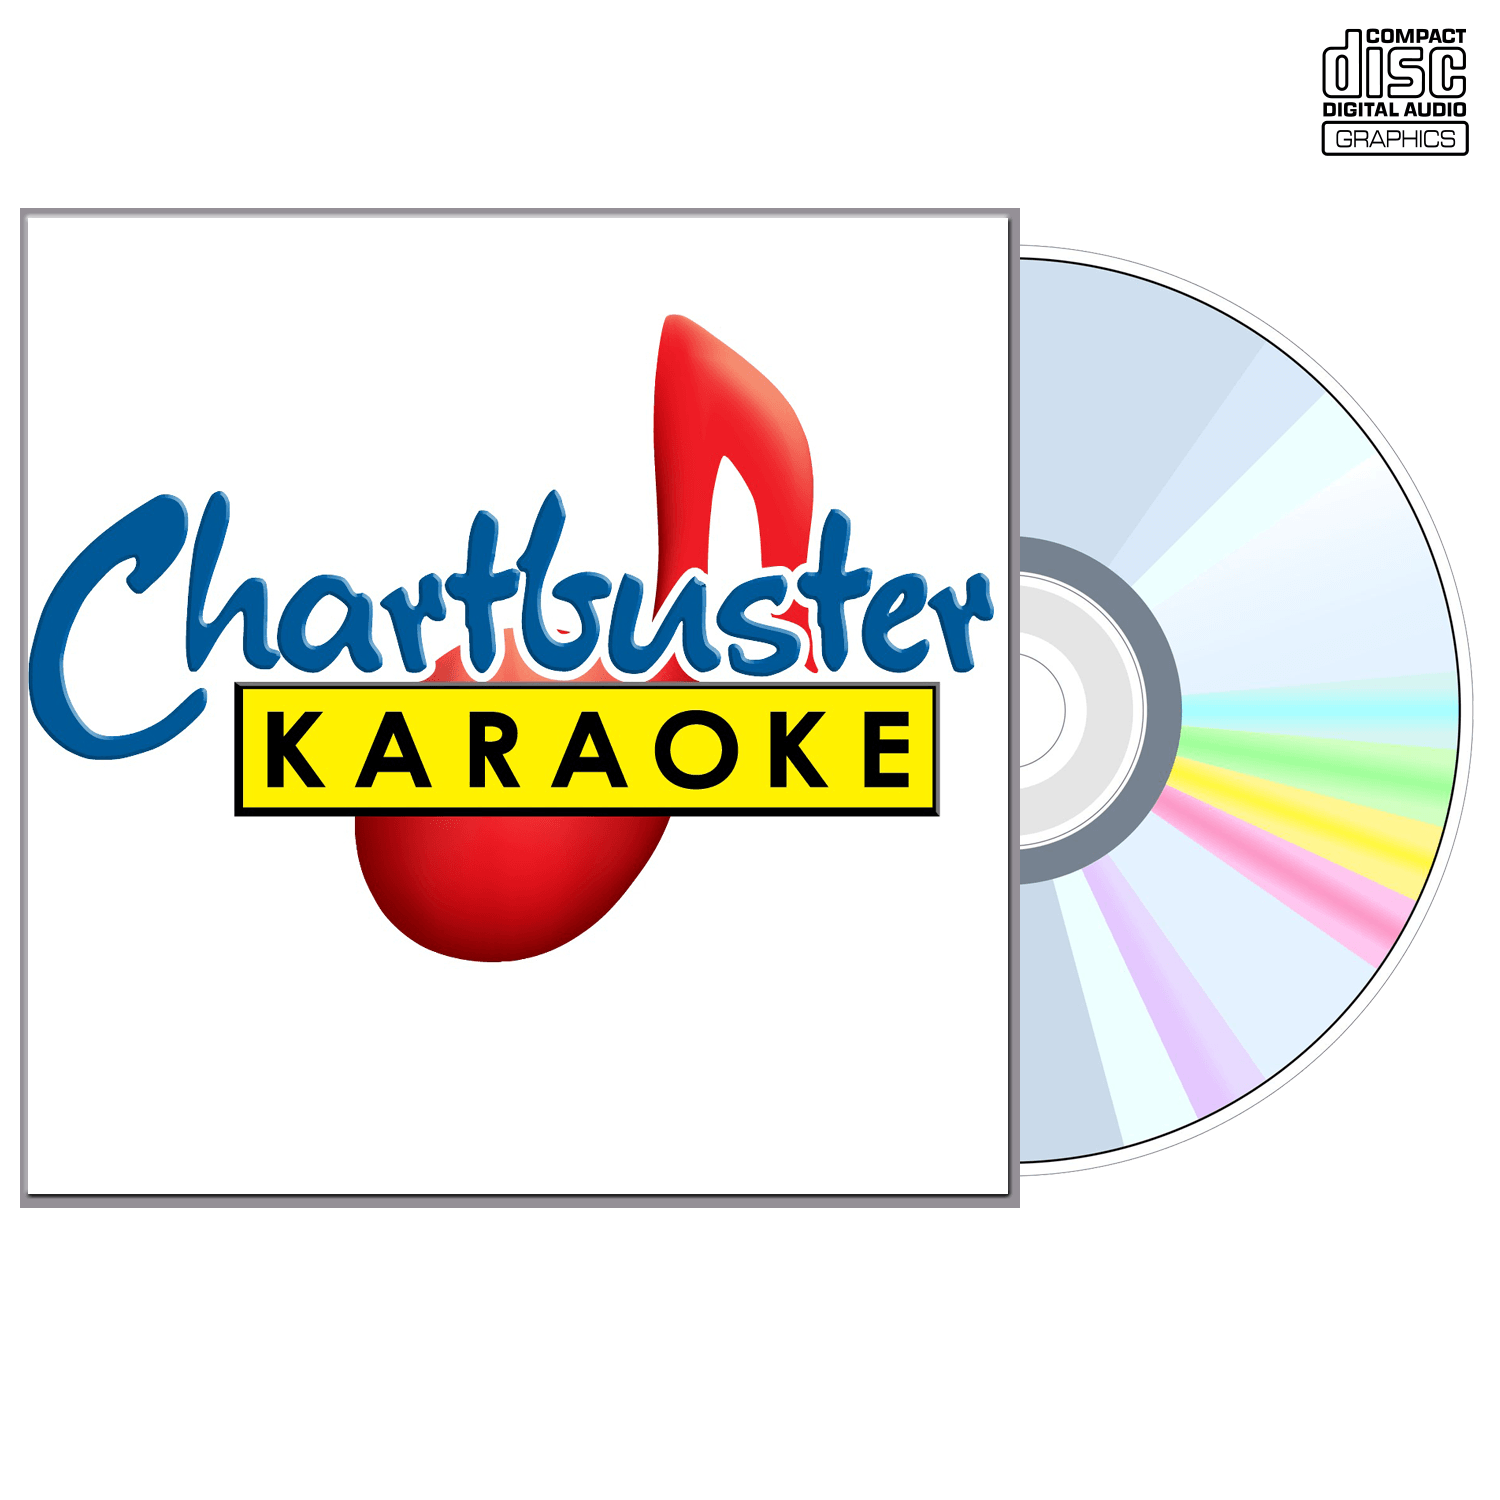 Whitney Houston Vol 2 - CD+G - Chartbuster Karaoke - Karaoke Home Entertainment